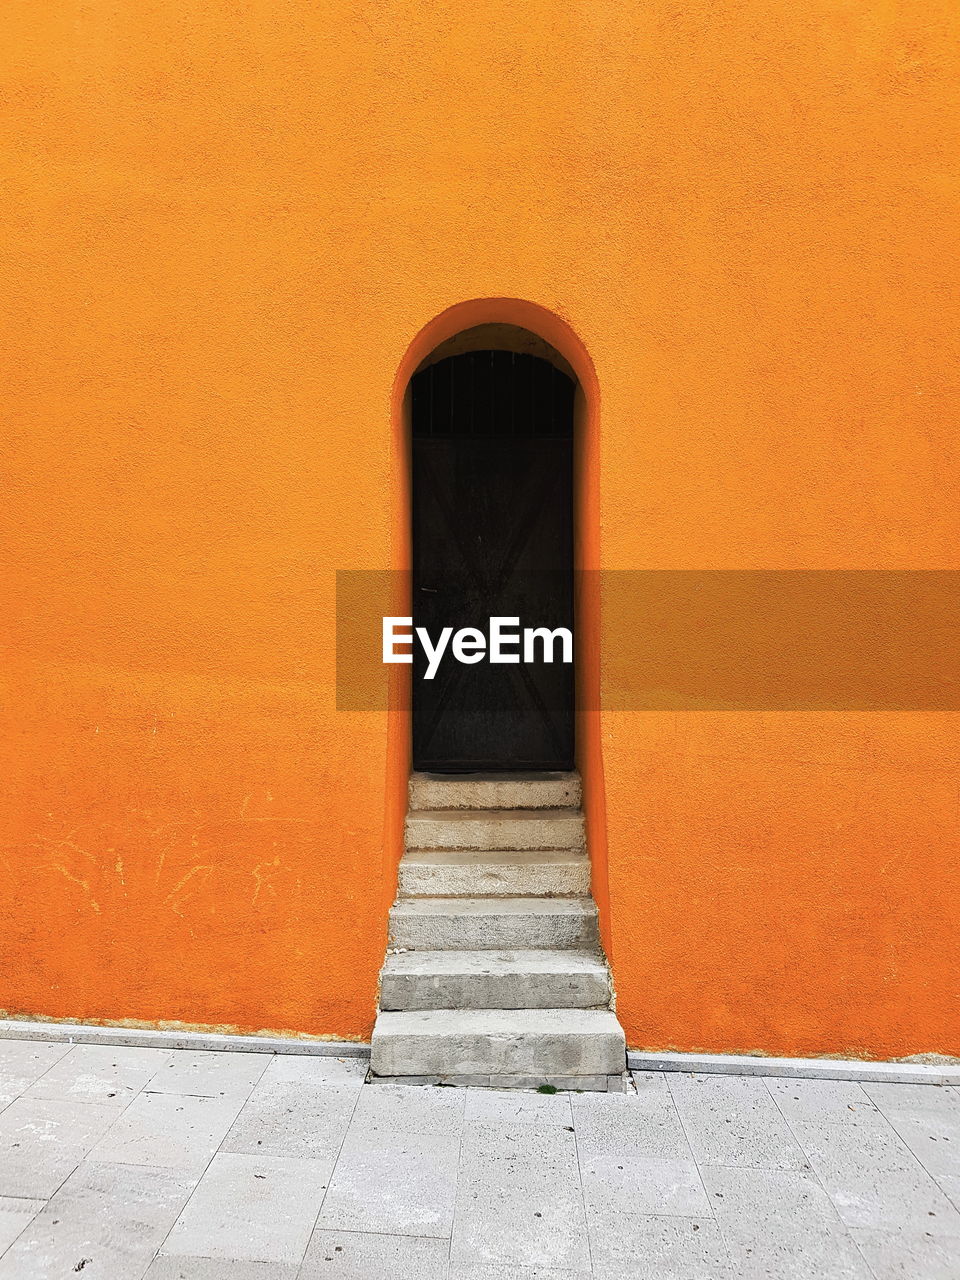 Architectural minimalism, orange wall, stairs and dark door.